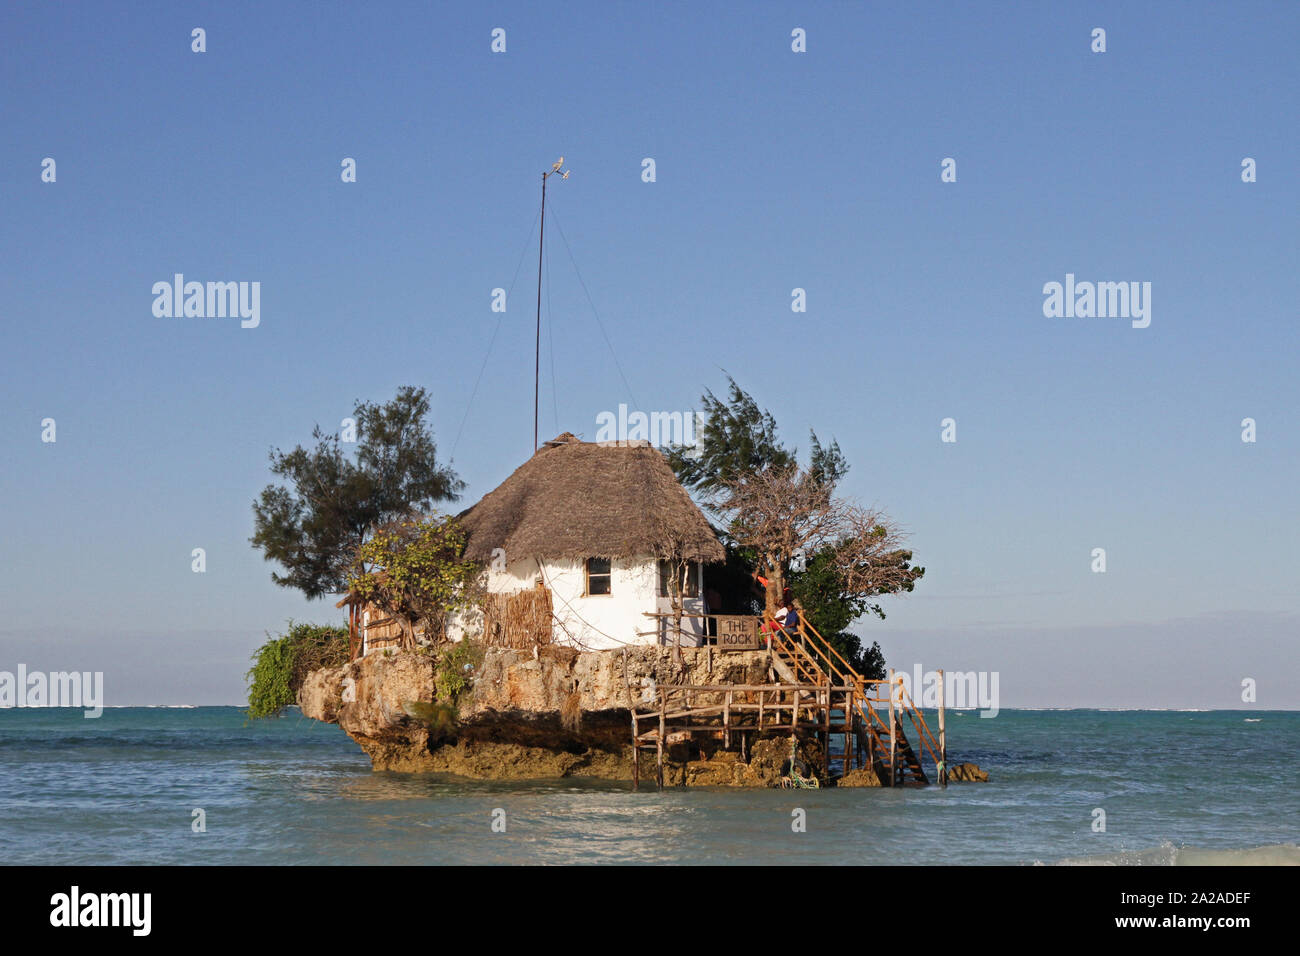 View of The Rock restaurant islet from the Zanzibar beach, Zanzibar, Unguja Island, Tanzania. Stock Photo